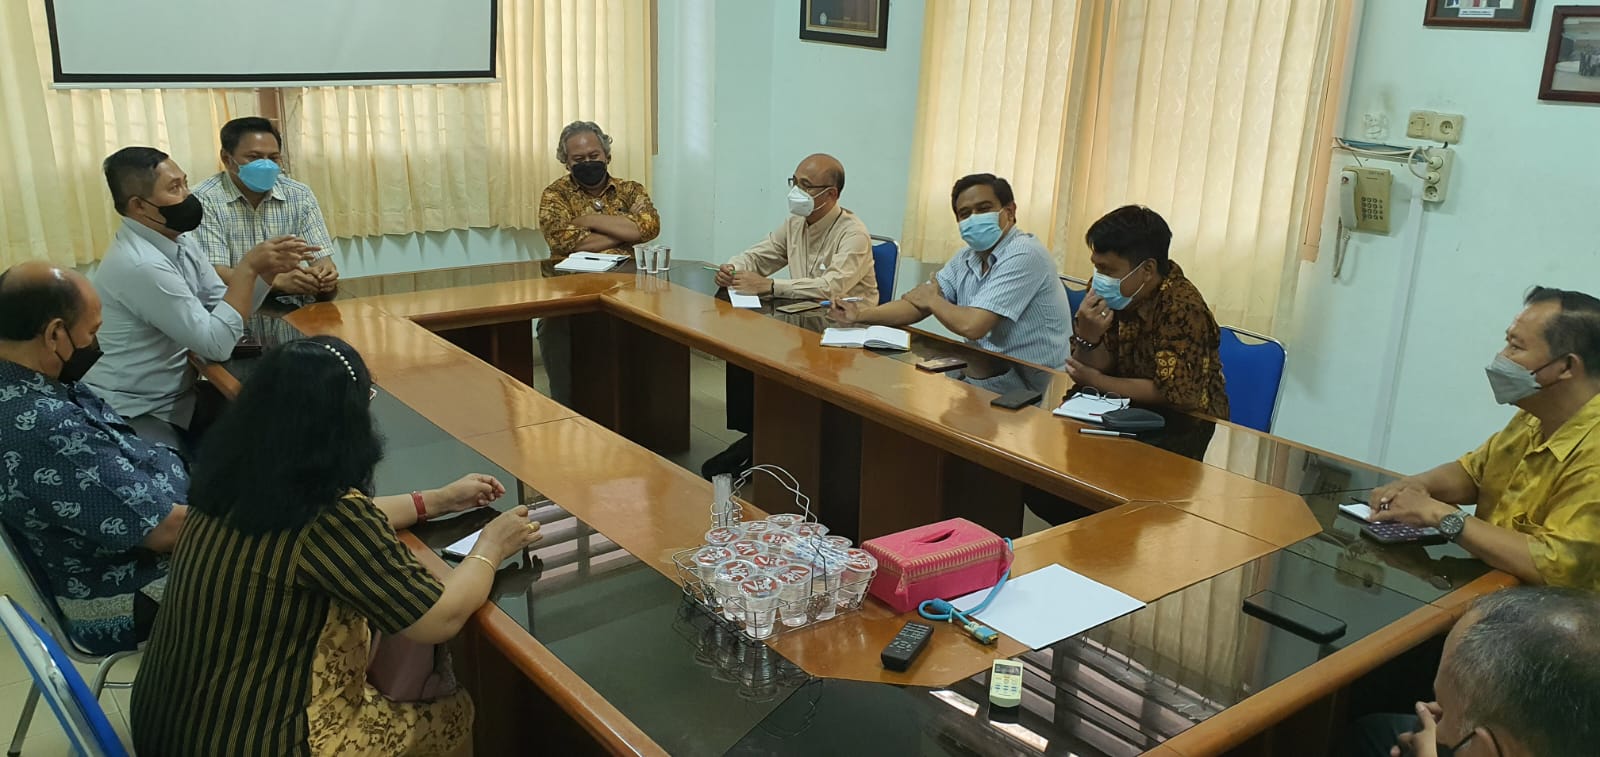 ISKA - UKMC - Yayasan Musi Palembang - Keuskupan Agung Palembang saling Berkolaborasi dan Bersinergi